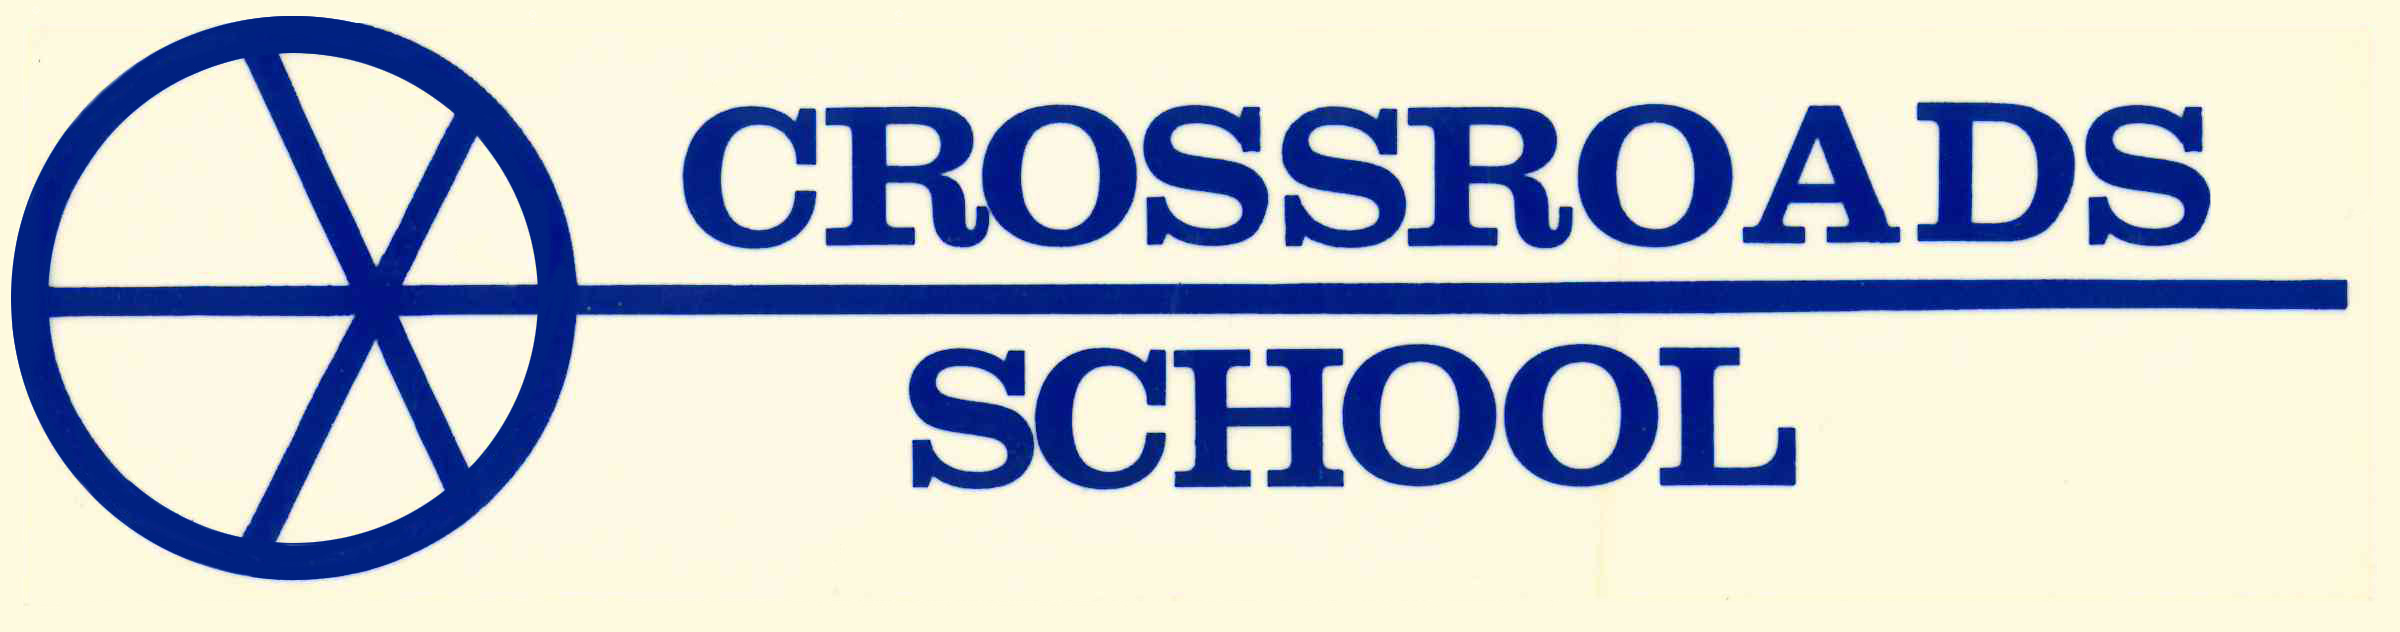 Crossroads School Logo circa 1974